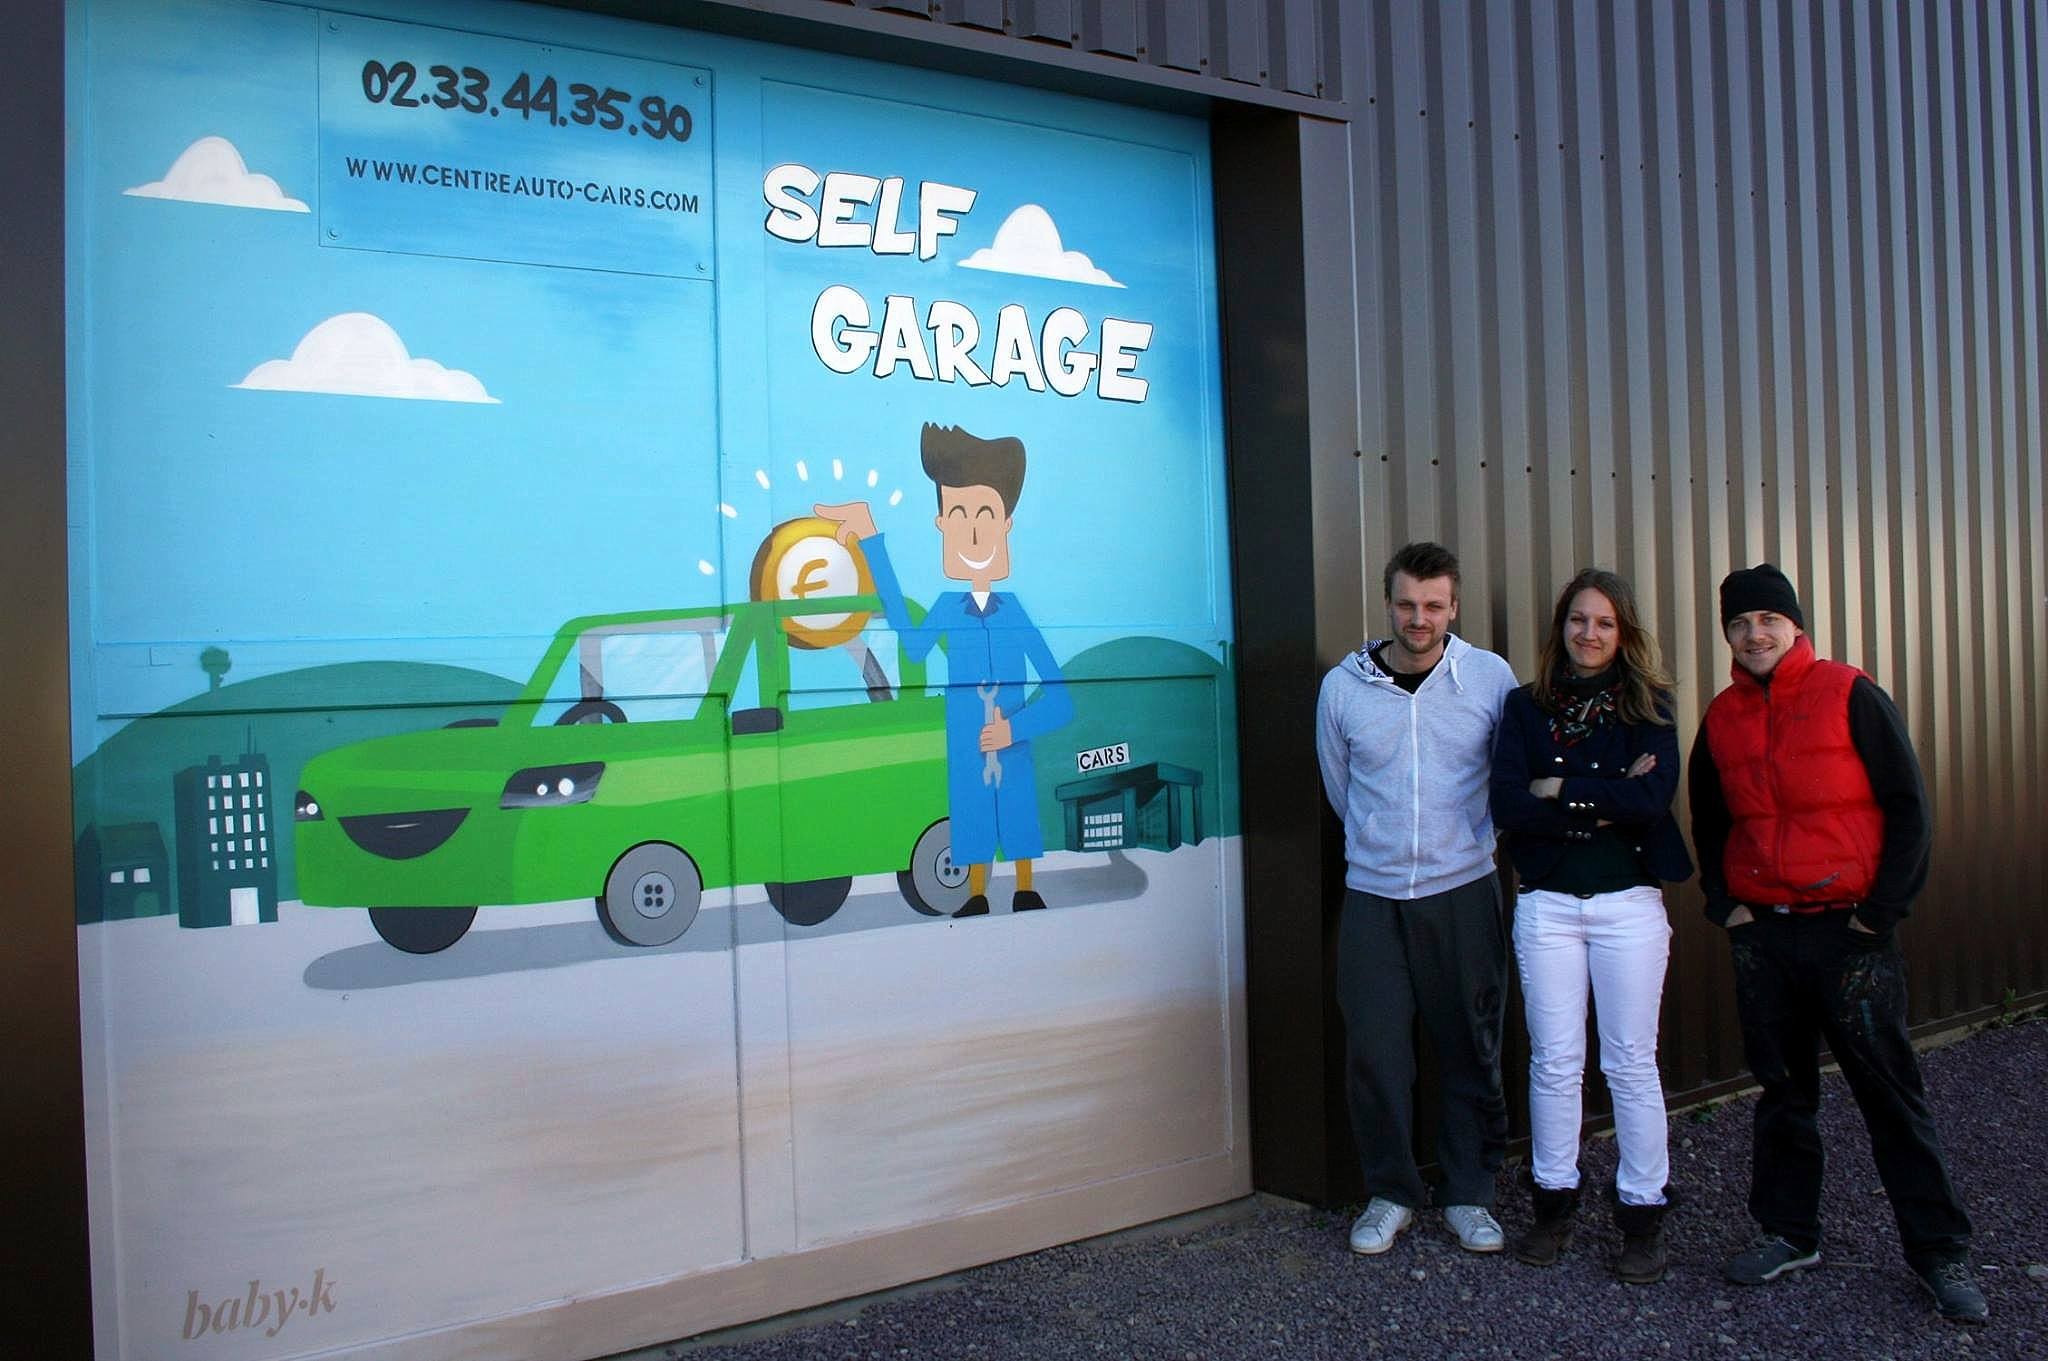 Garage self service -Cherbourg - avril 2015